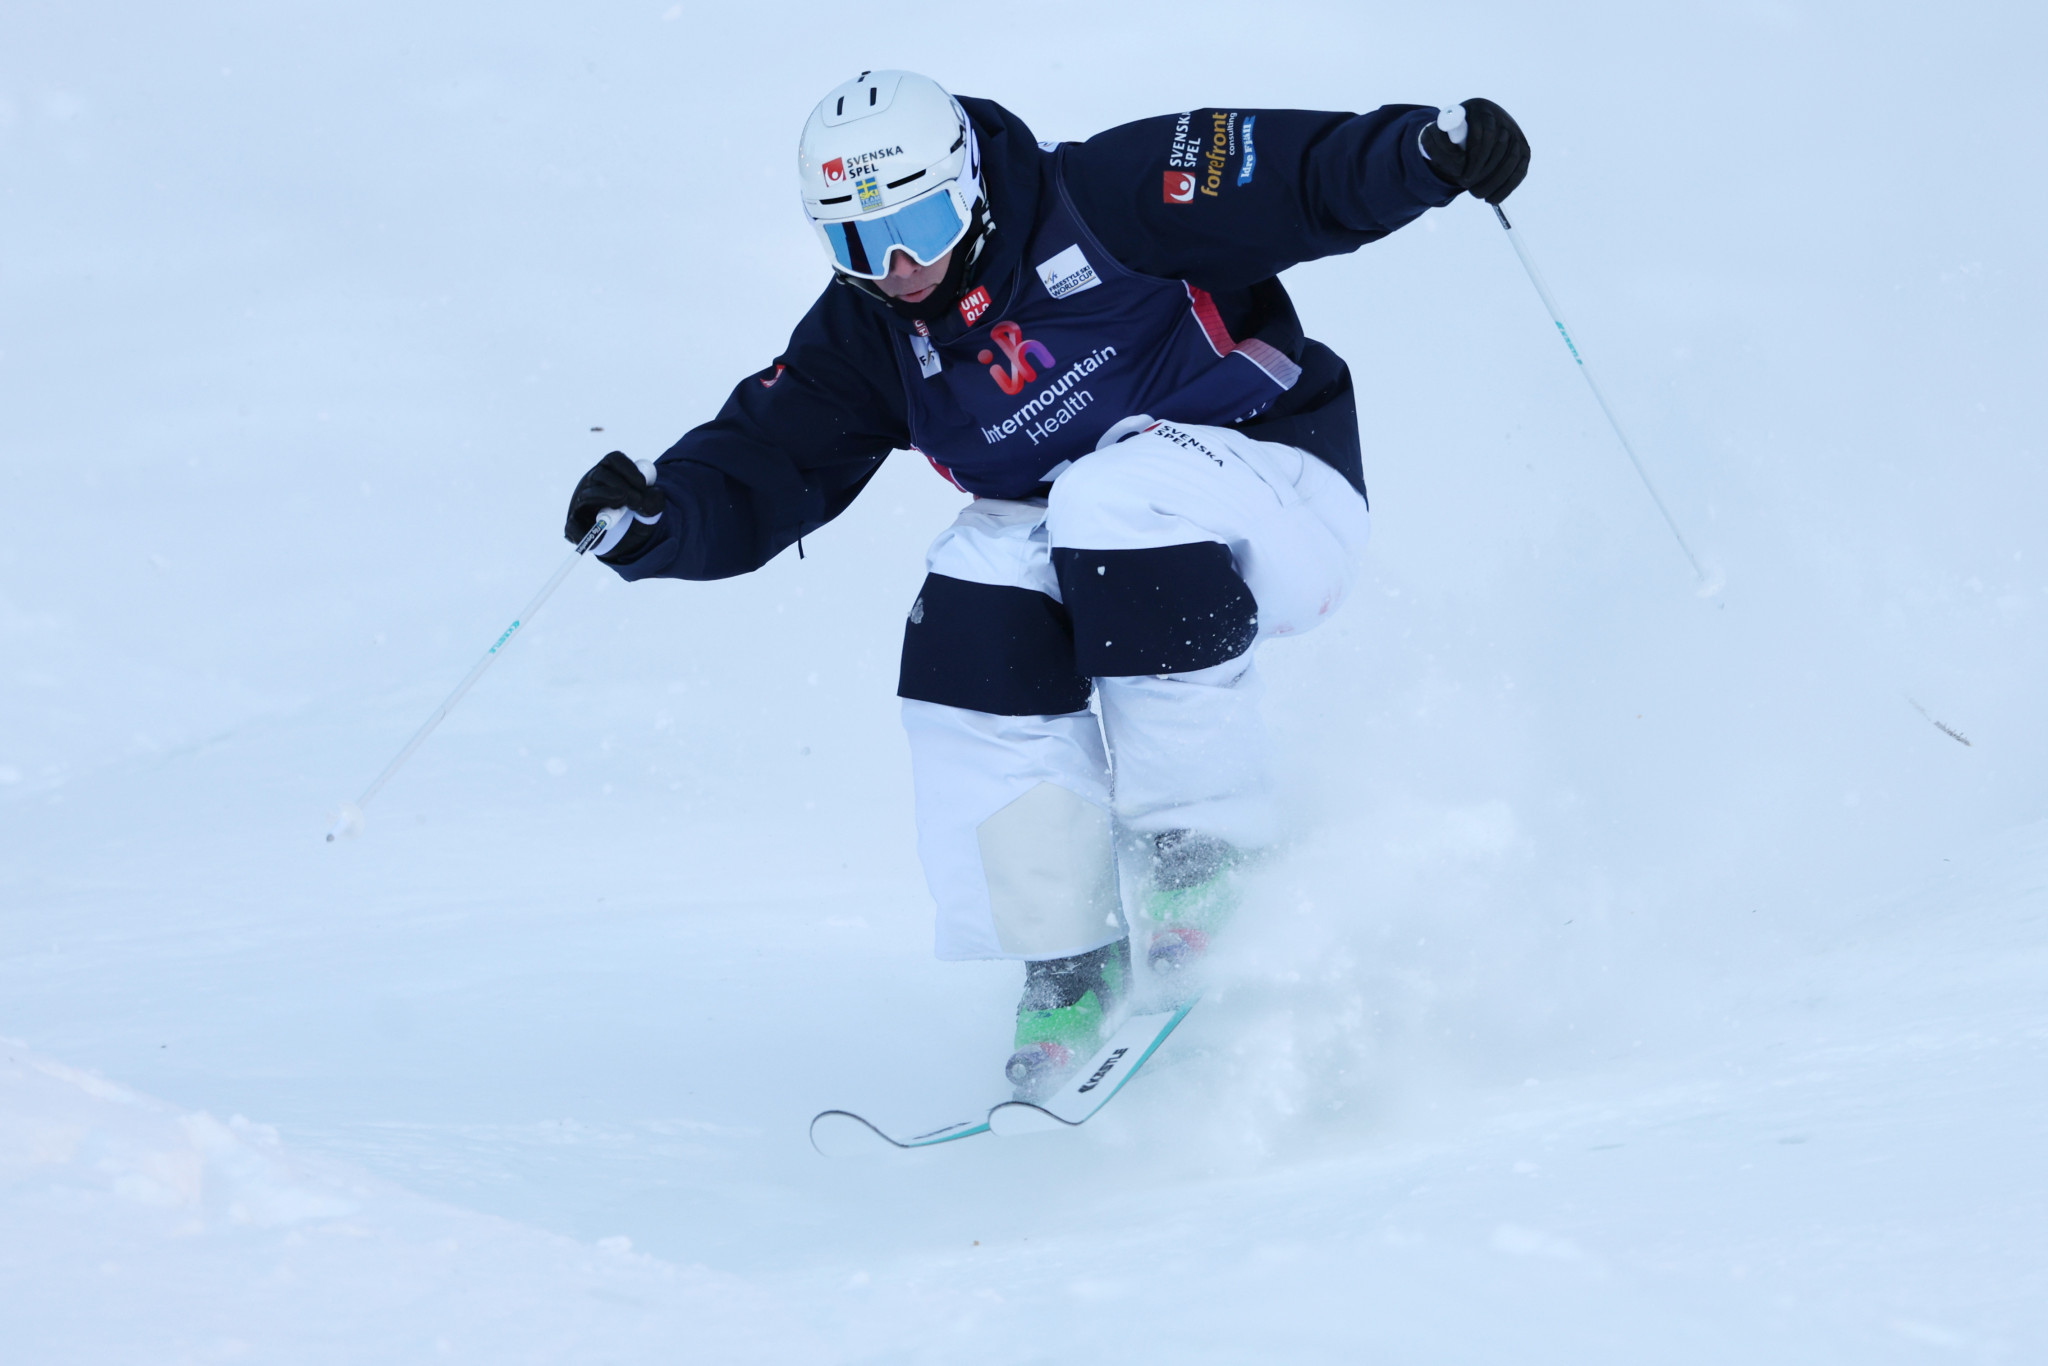 Gravenfors and Macuga dominate moguls at FIS Freestyle Junior Ski World Championships